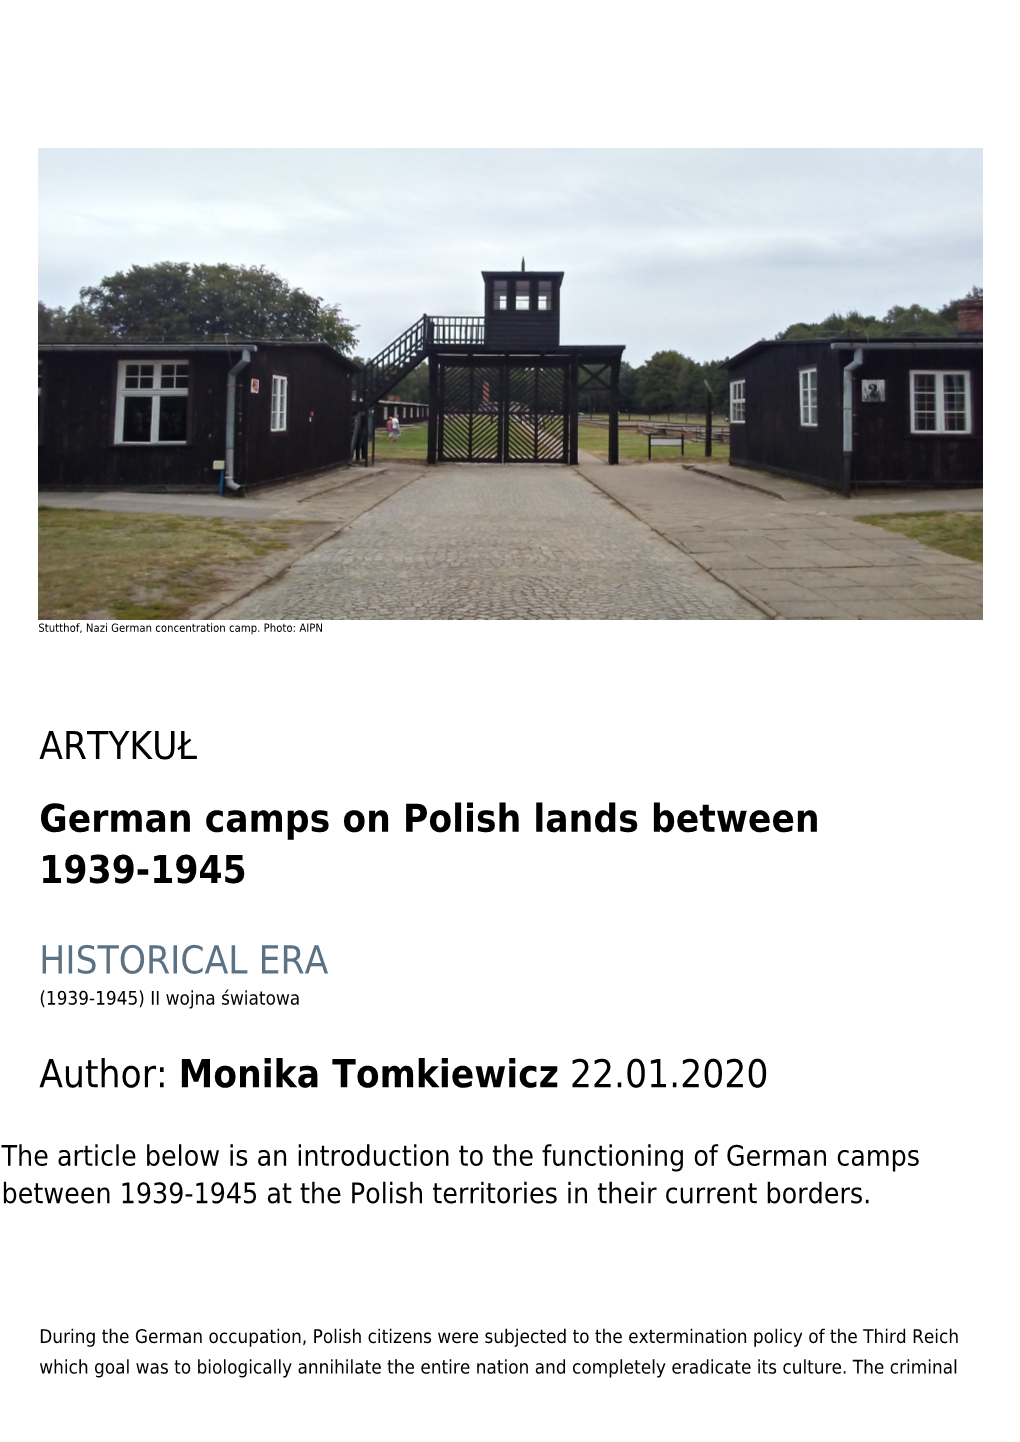 ARTYKUŁ German Camps on Polish Lands Between 1939-1945 HISTORICAL ERA Author